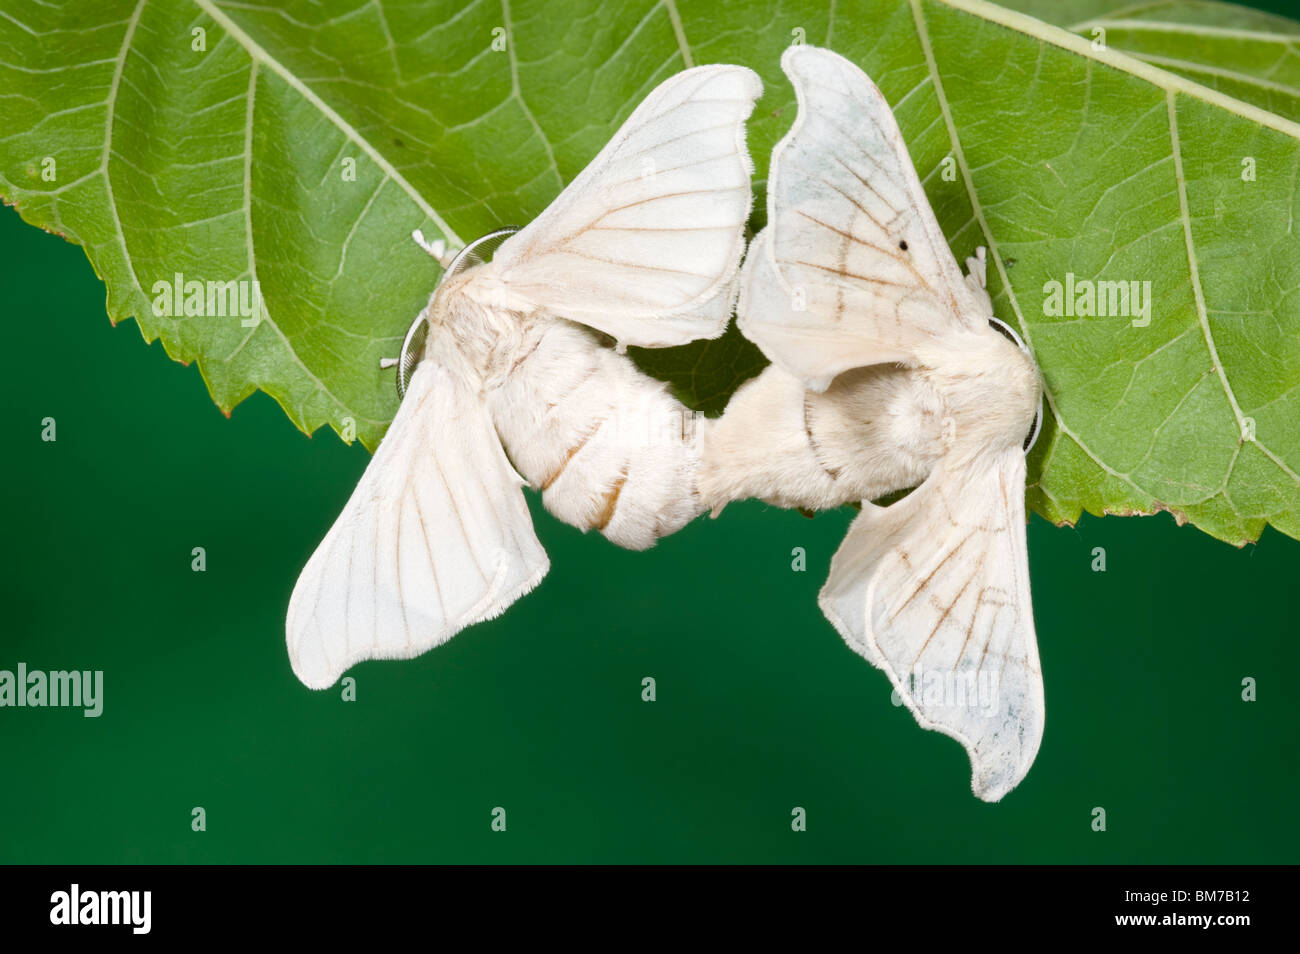 Mating pair of silkworm moths Stock Photo